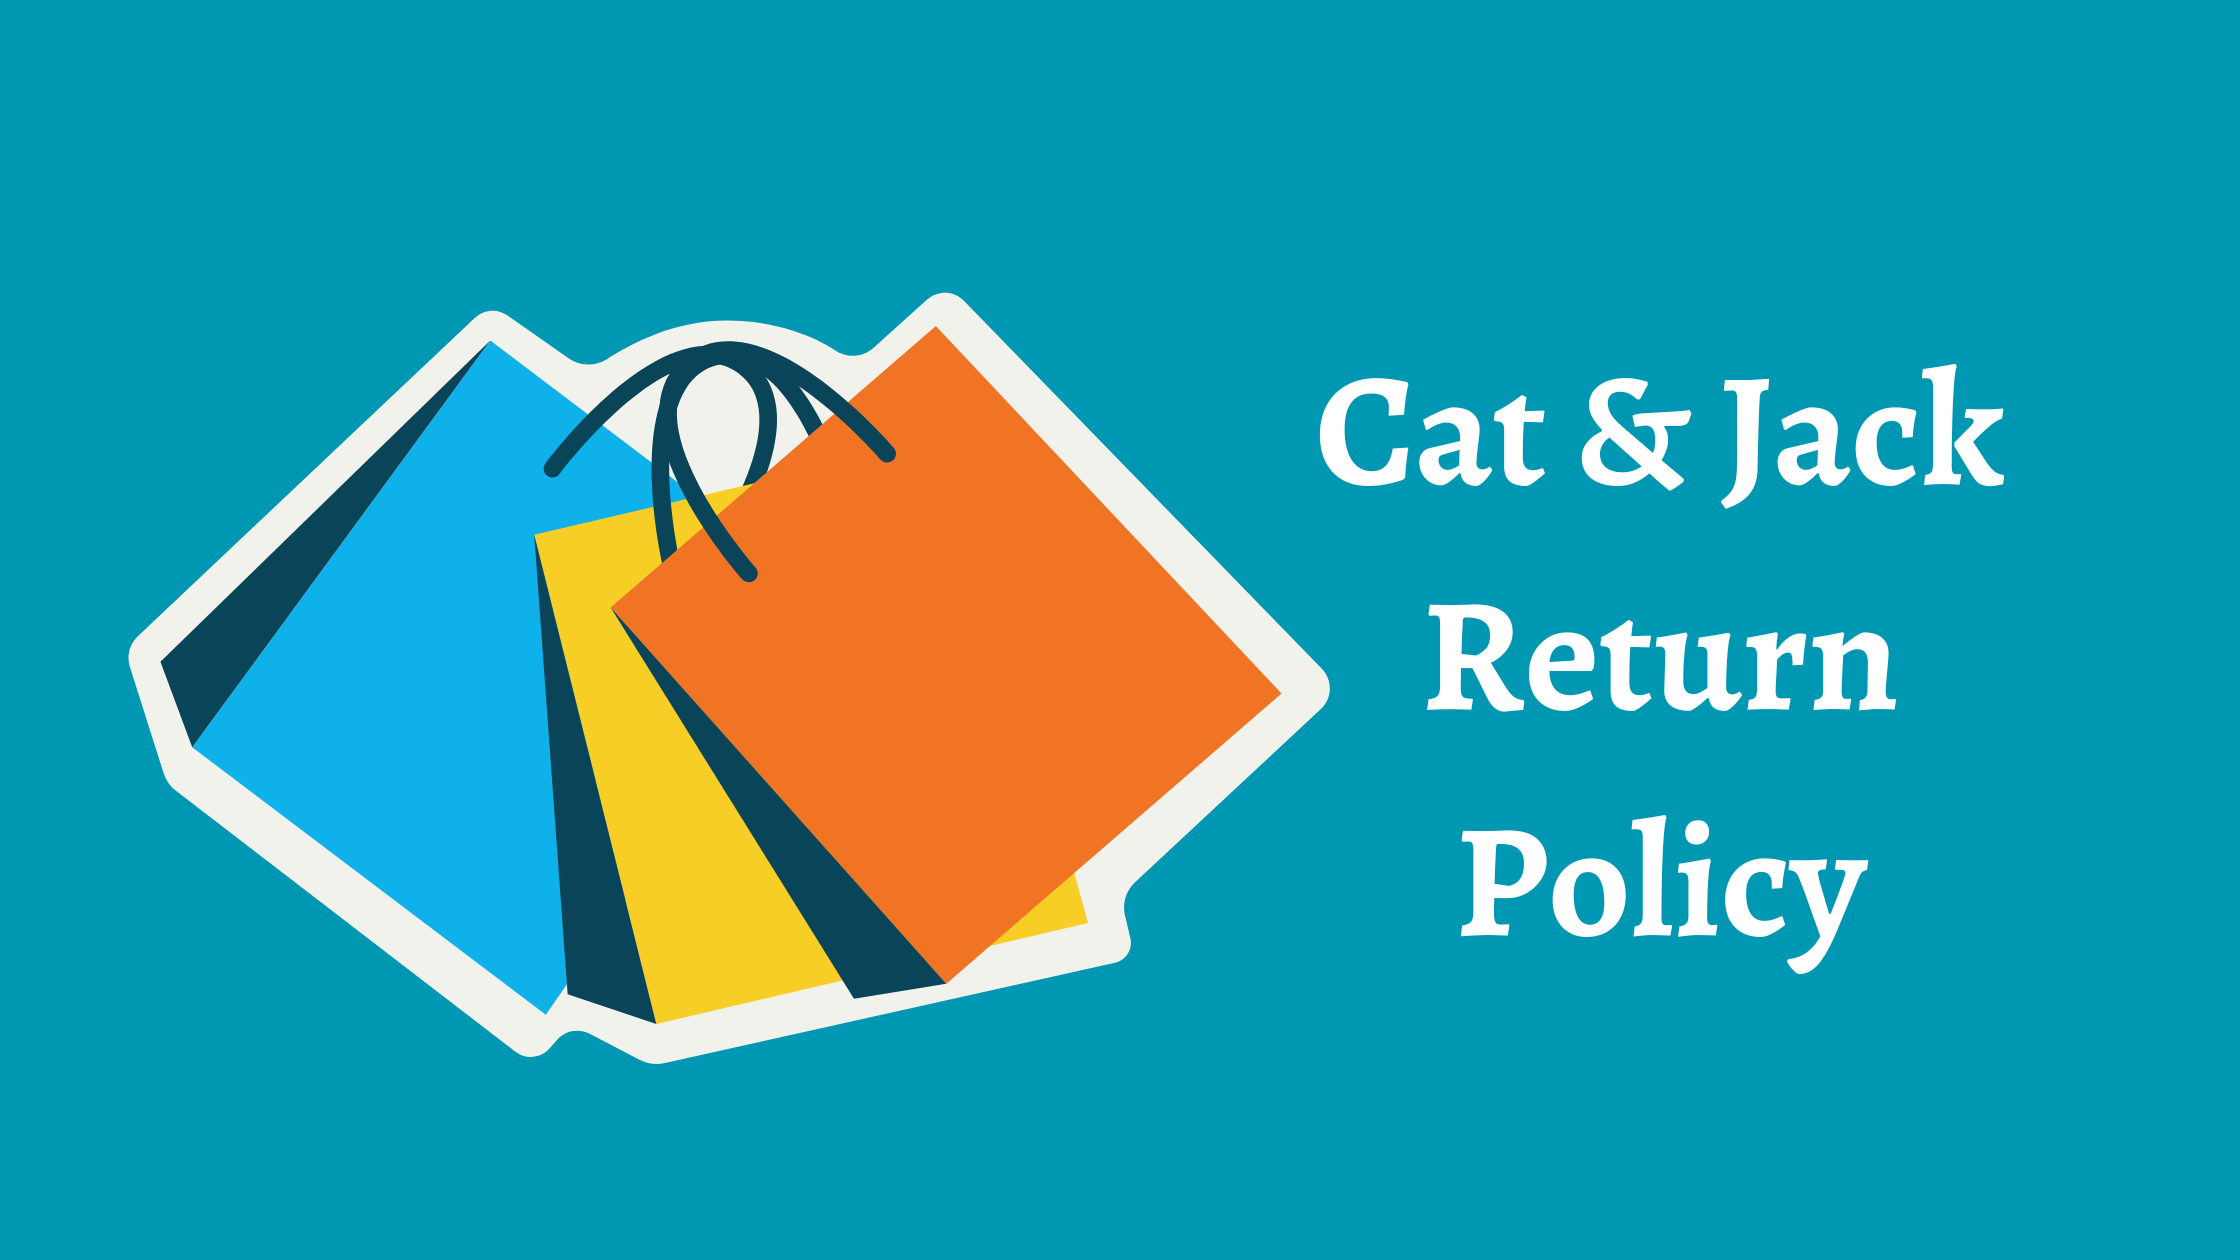 Understanding the Cat & Jack Return Policy